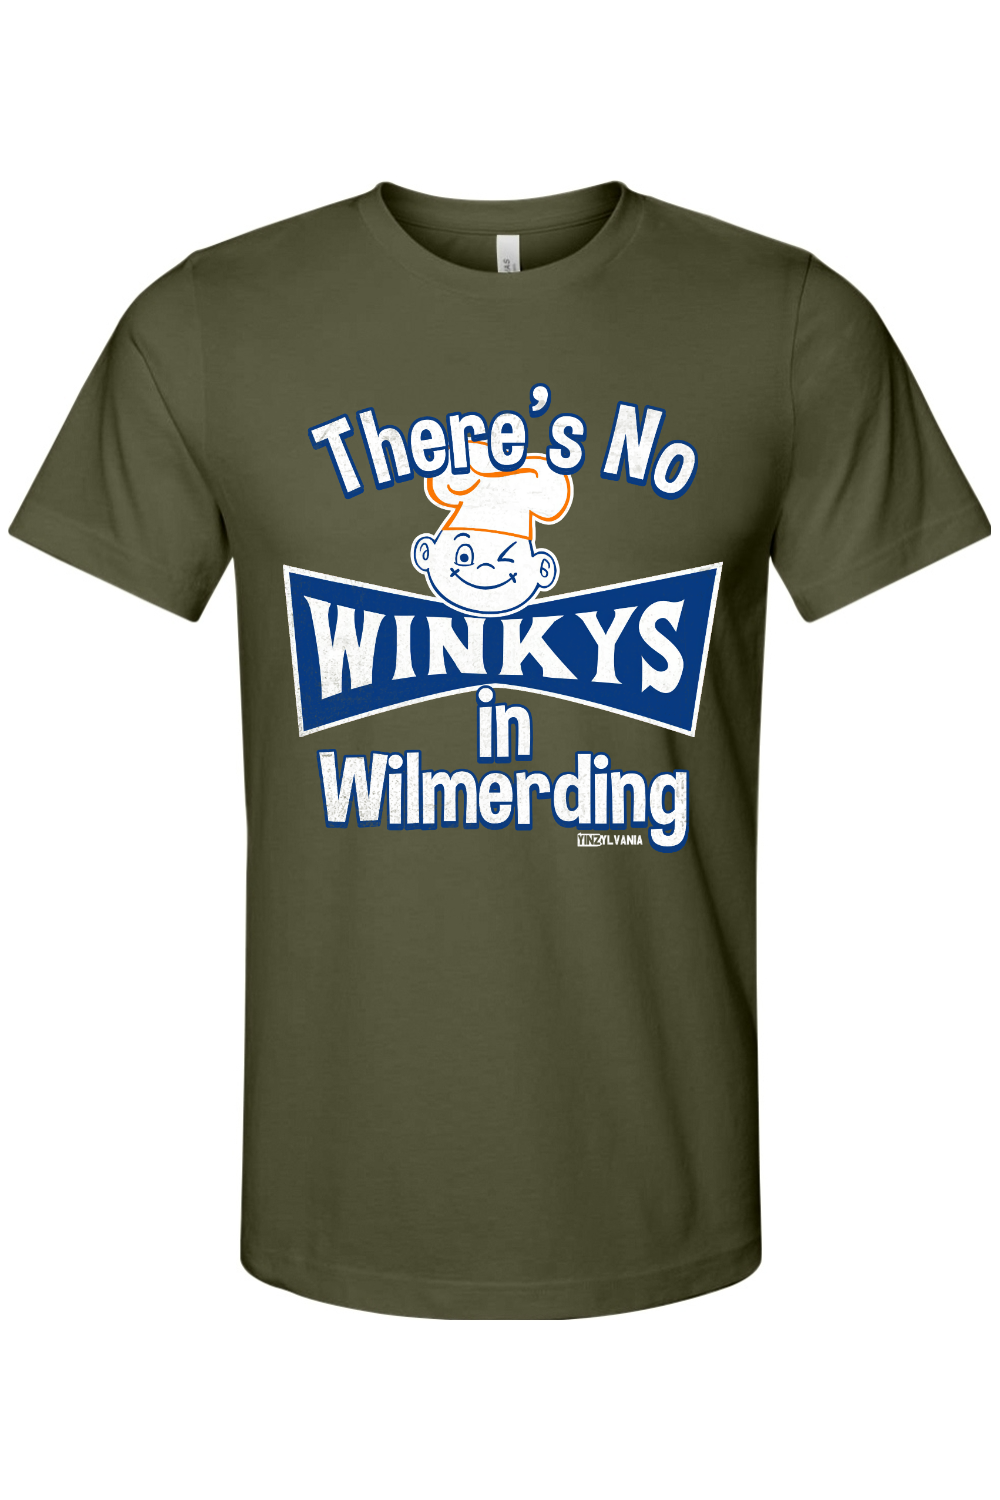 There's No Winkys in Wilmerding - Bella + Canvas Jersey Tee - Yinzylvania